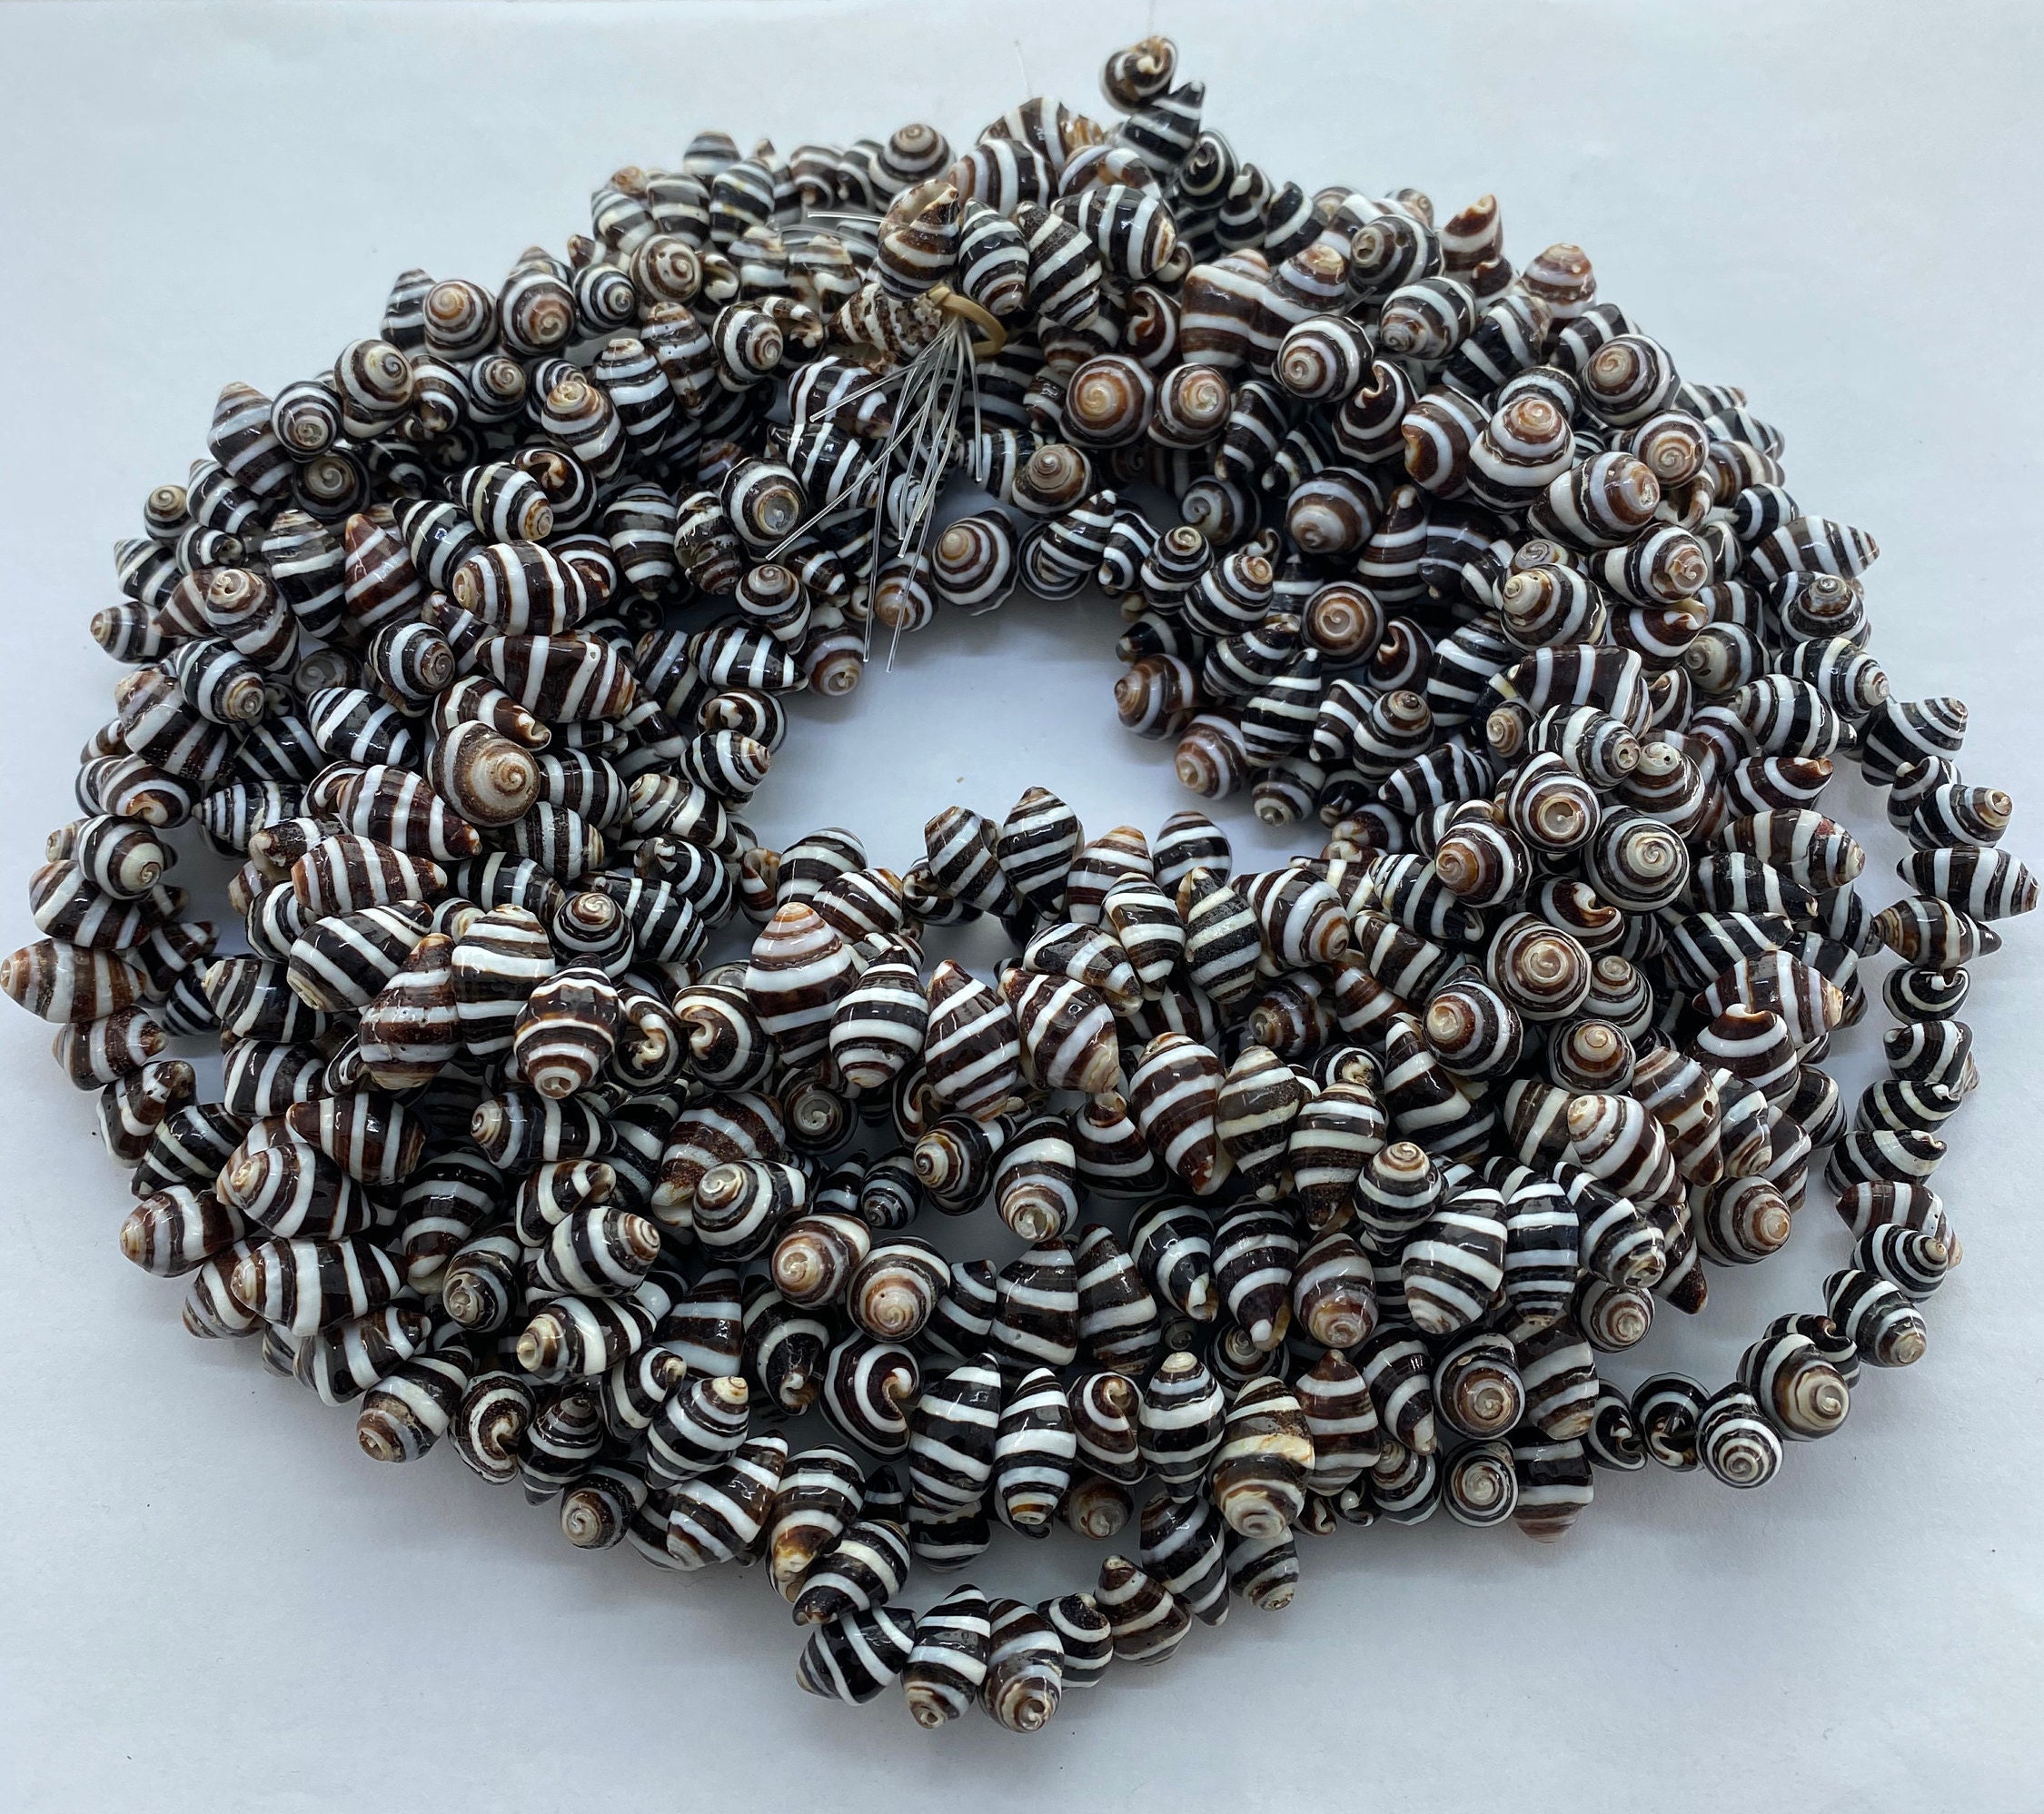 Striped Puffed Shell Beads